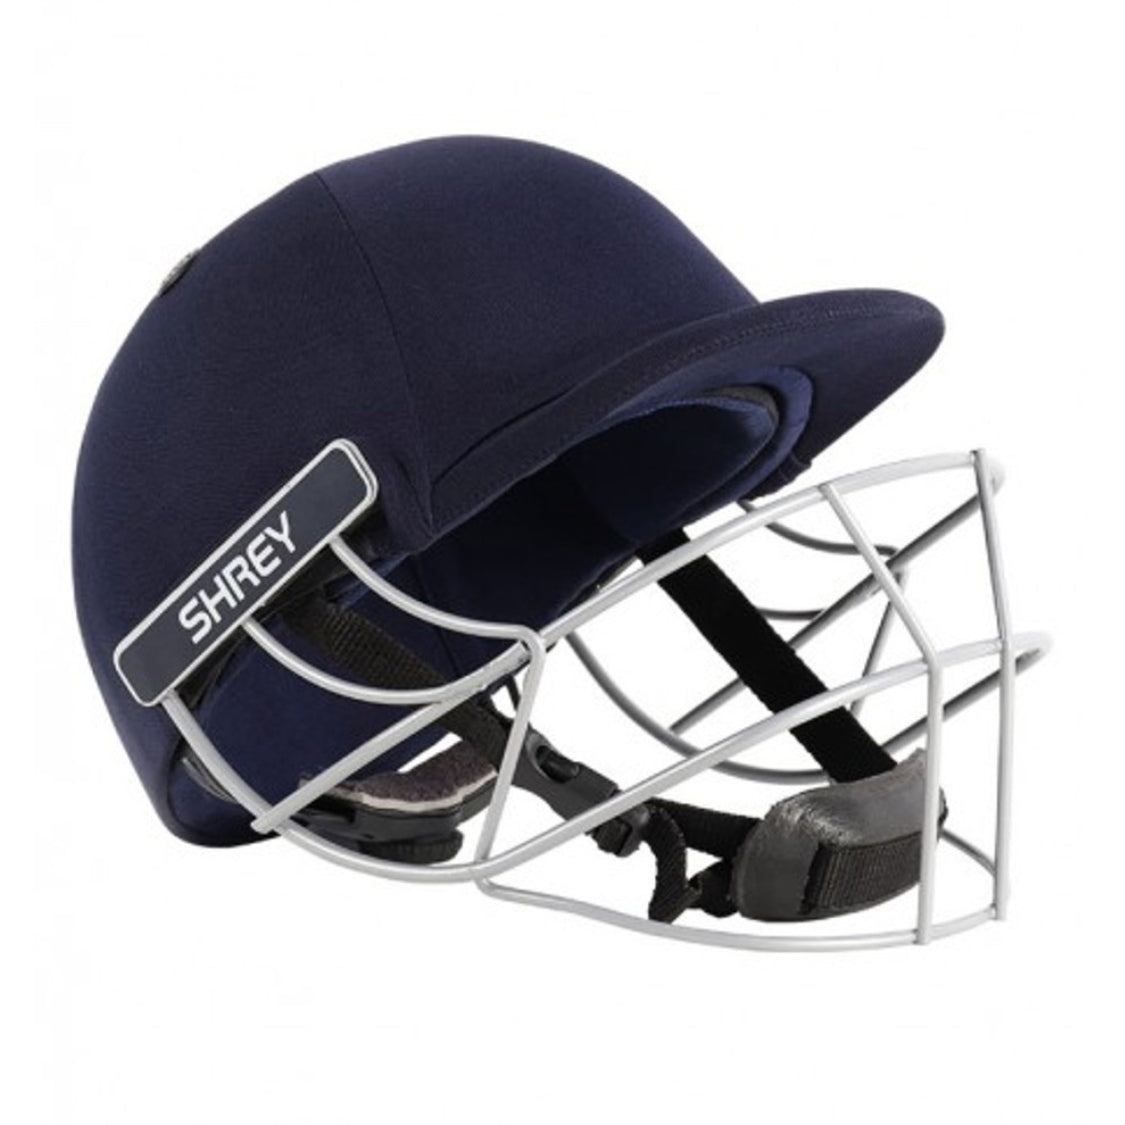 Shrey Cricket Batting Helmet, Model Classic